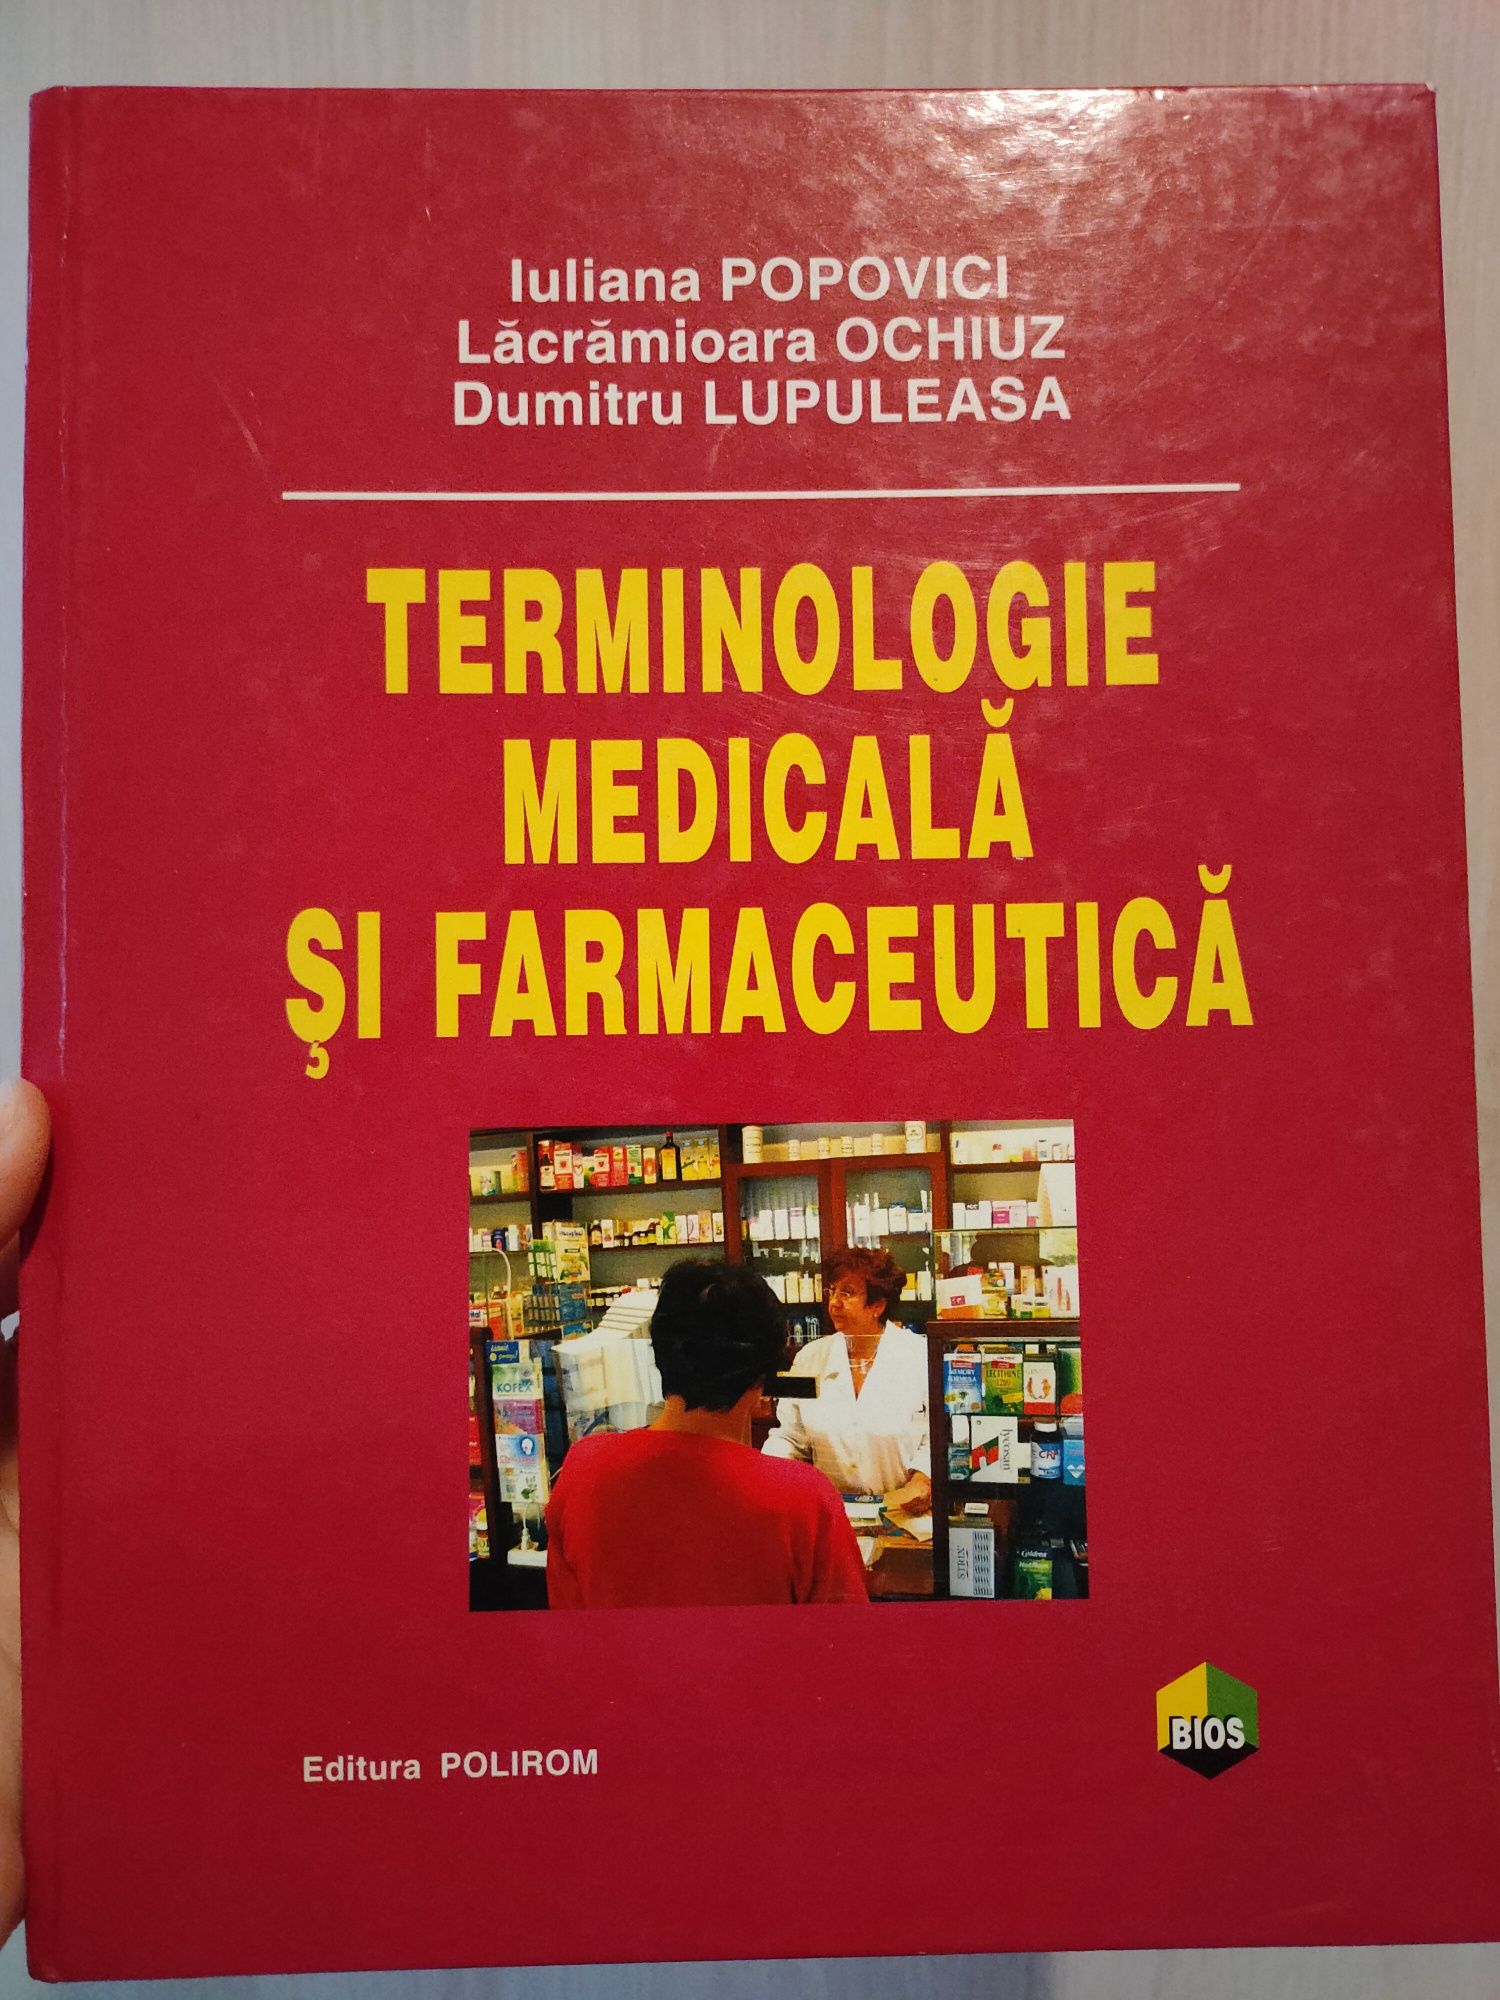 Terminologie medicala si farmaceutica
D. Lupuleasa, L. OCHIUZ, I. POPO